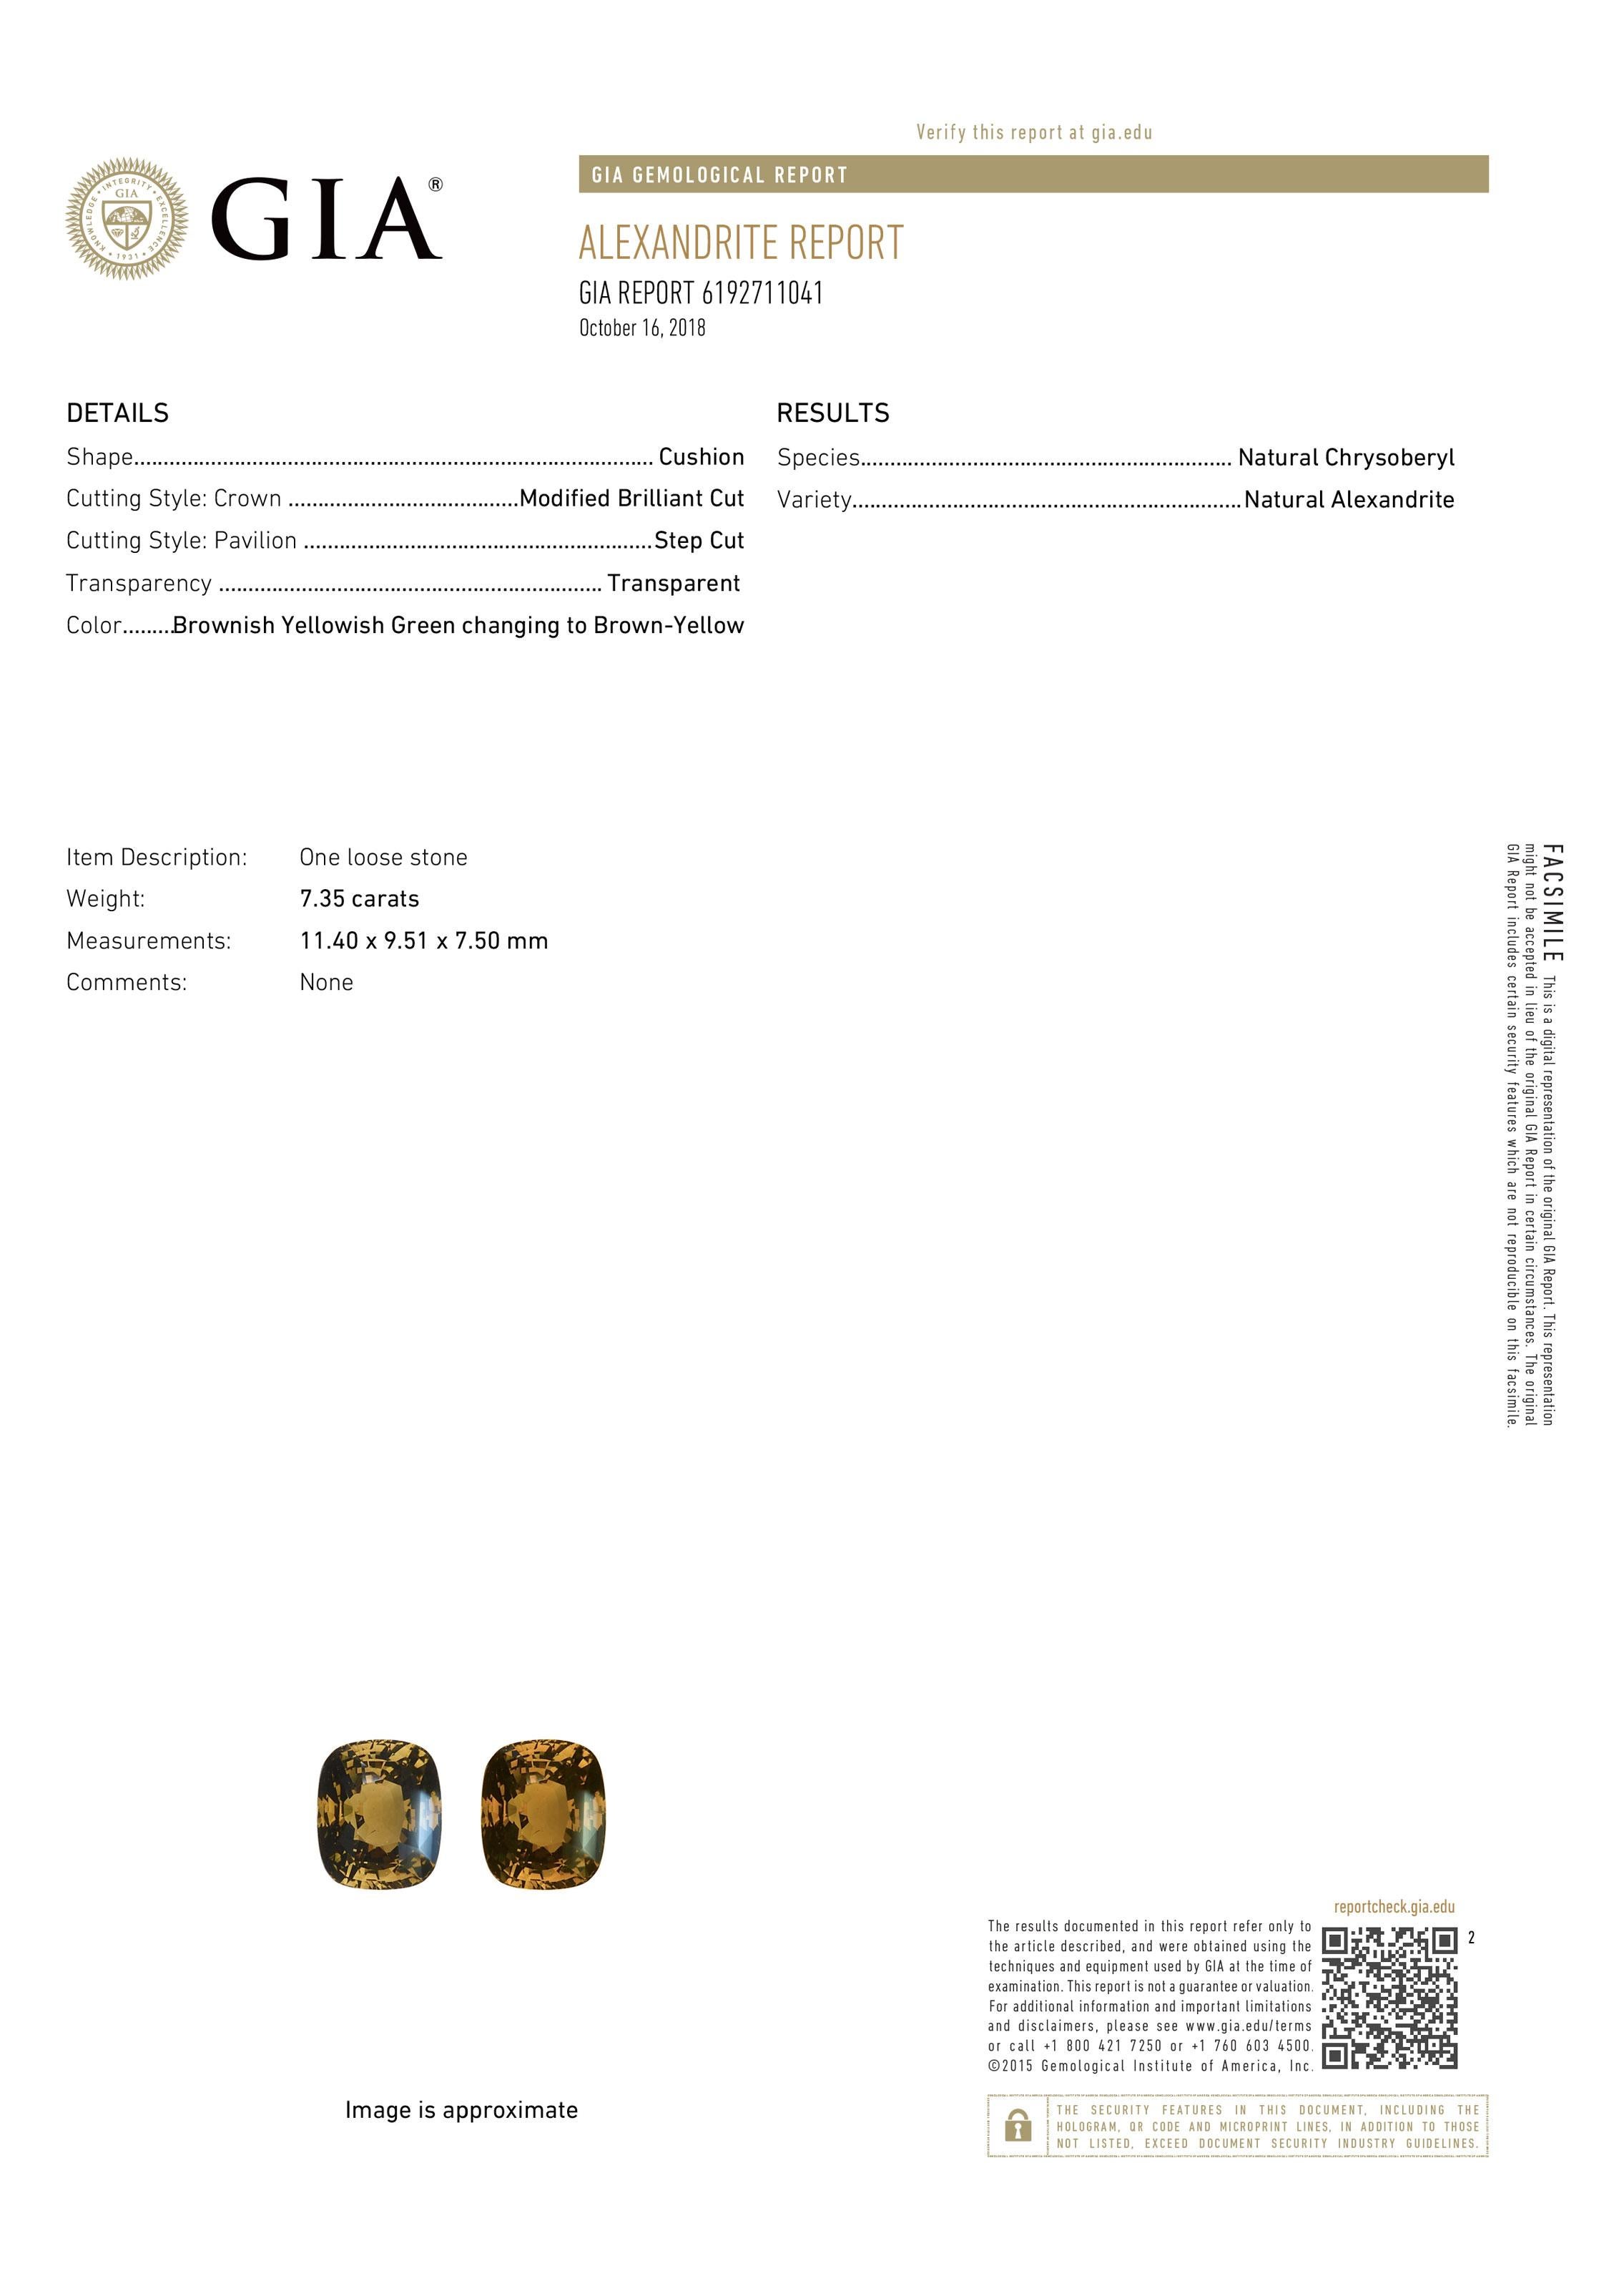 Coussin en alexandrite naturelle certifiée GIA de 7,35 carats Unisexe en vente